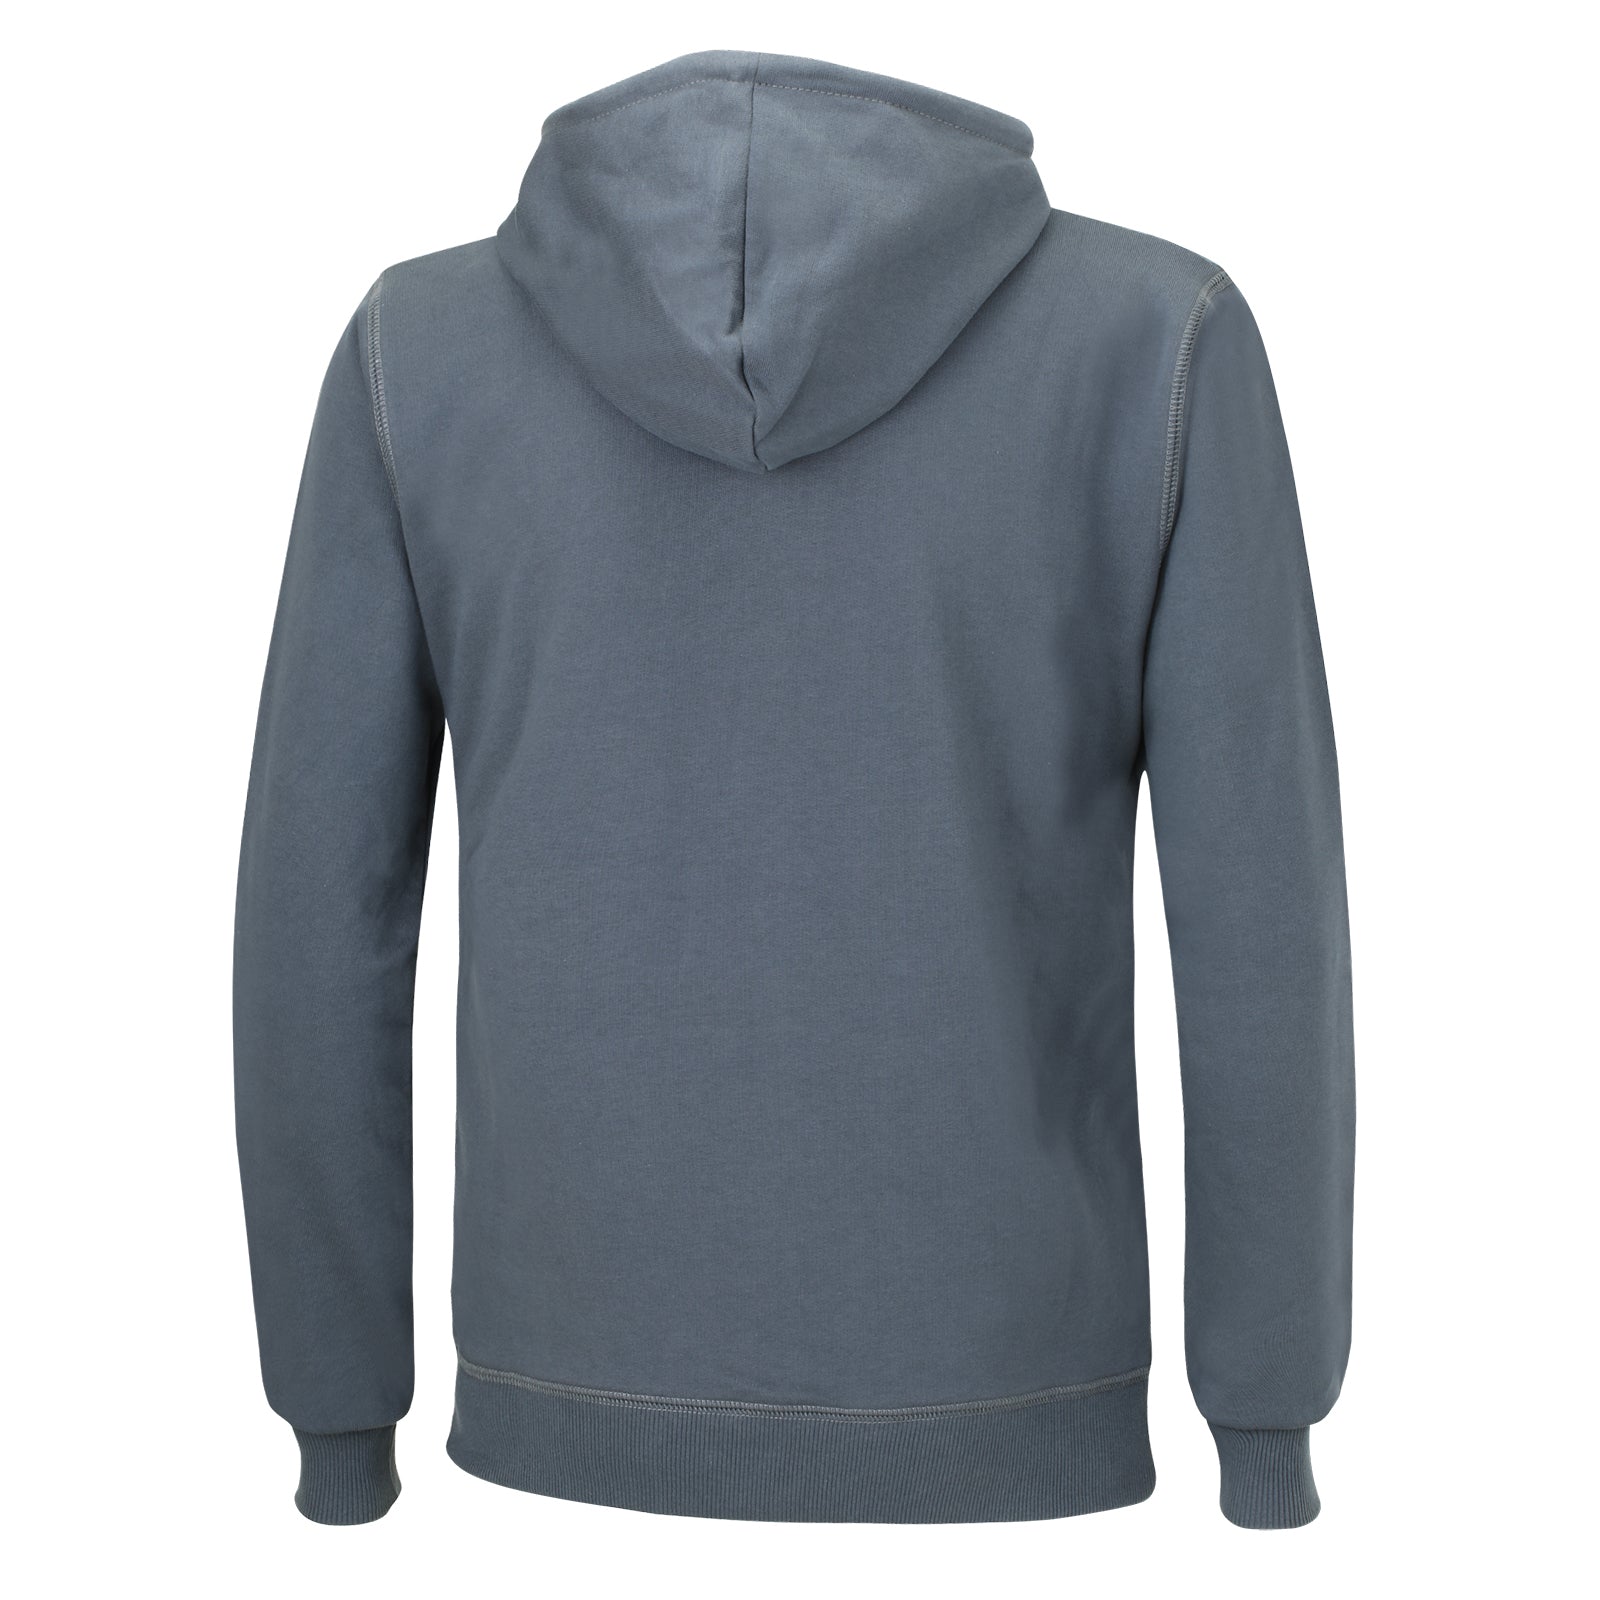 Sweatshirt-mit-kapuze-winter-thermo-pro-hoodie-sweater-herren-damen-s-m-l-xl-xxl-grau-schwarz-back